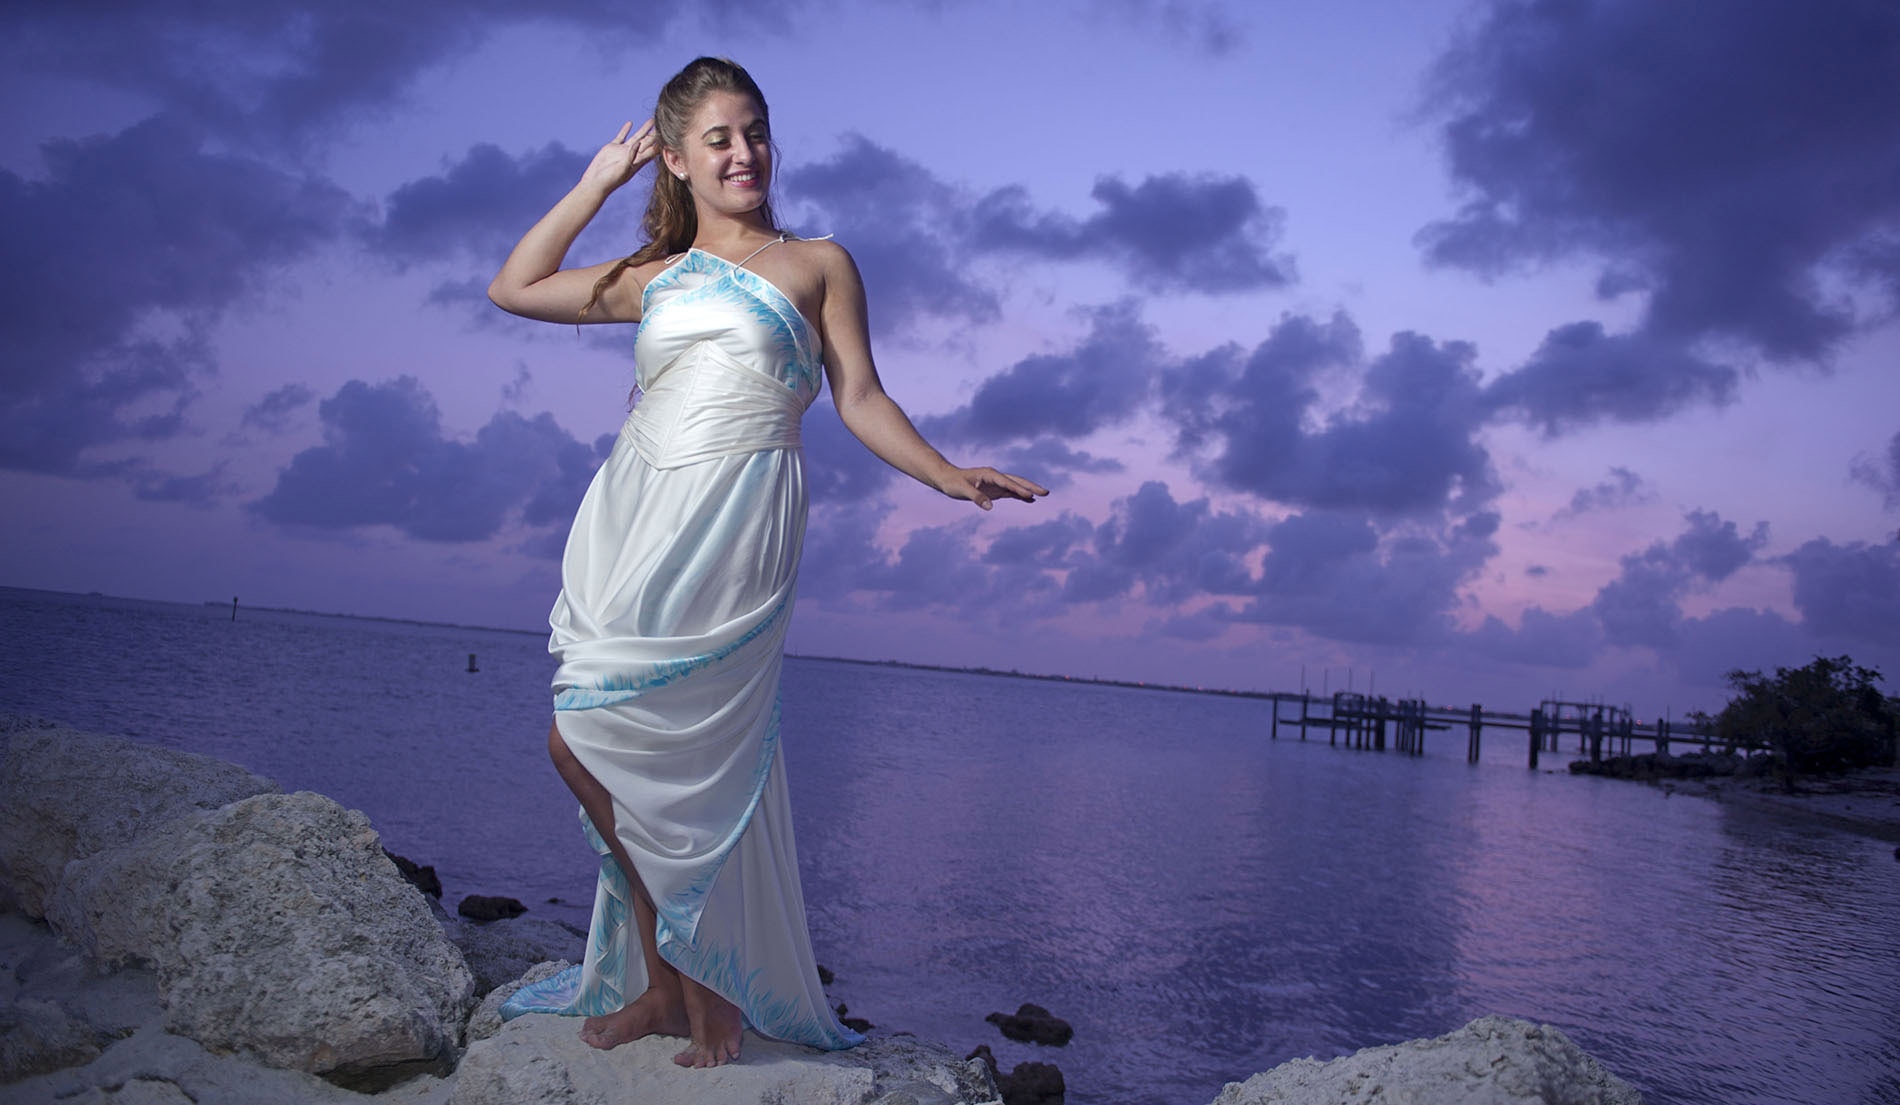 Deco Inspired Beach Theme Wedding Dress - Beatrice - Look 1 front